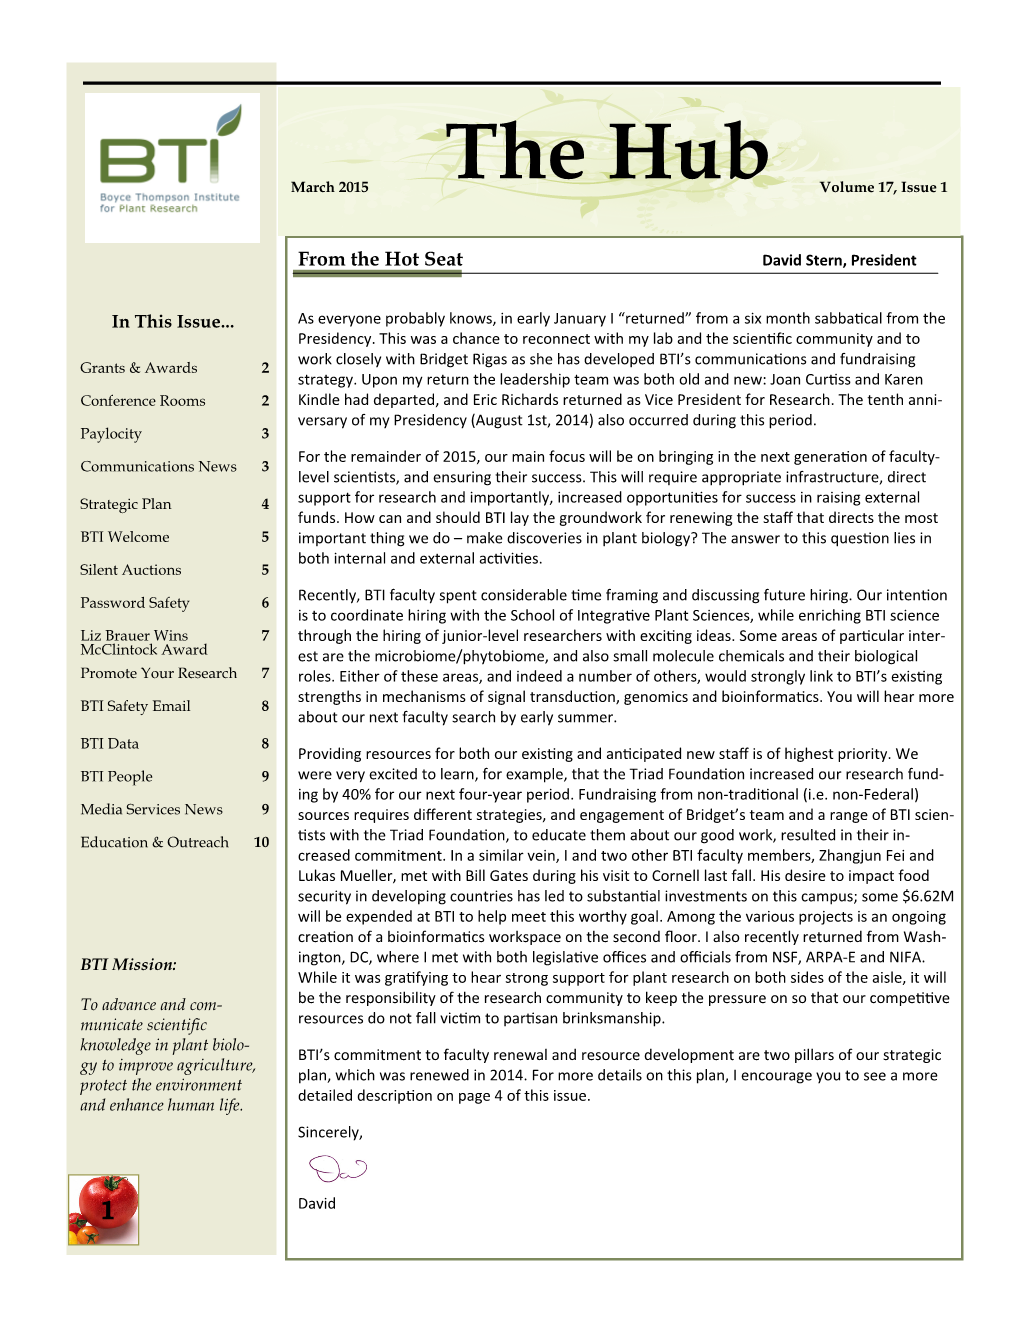 The Hub Volume 17, Issue 1